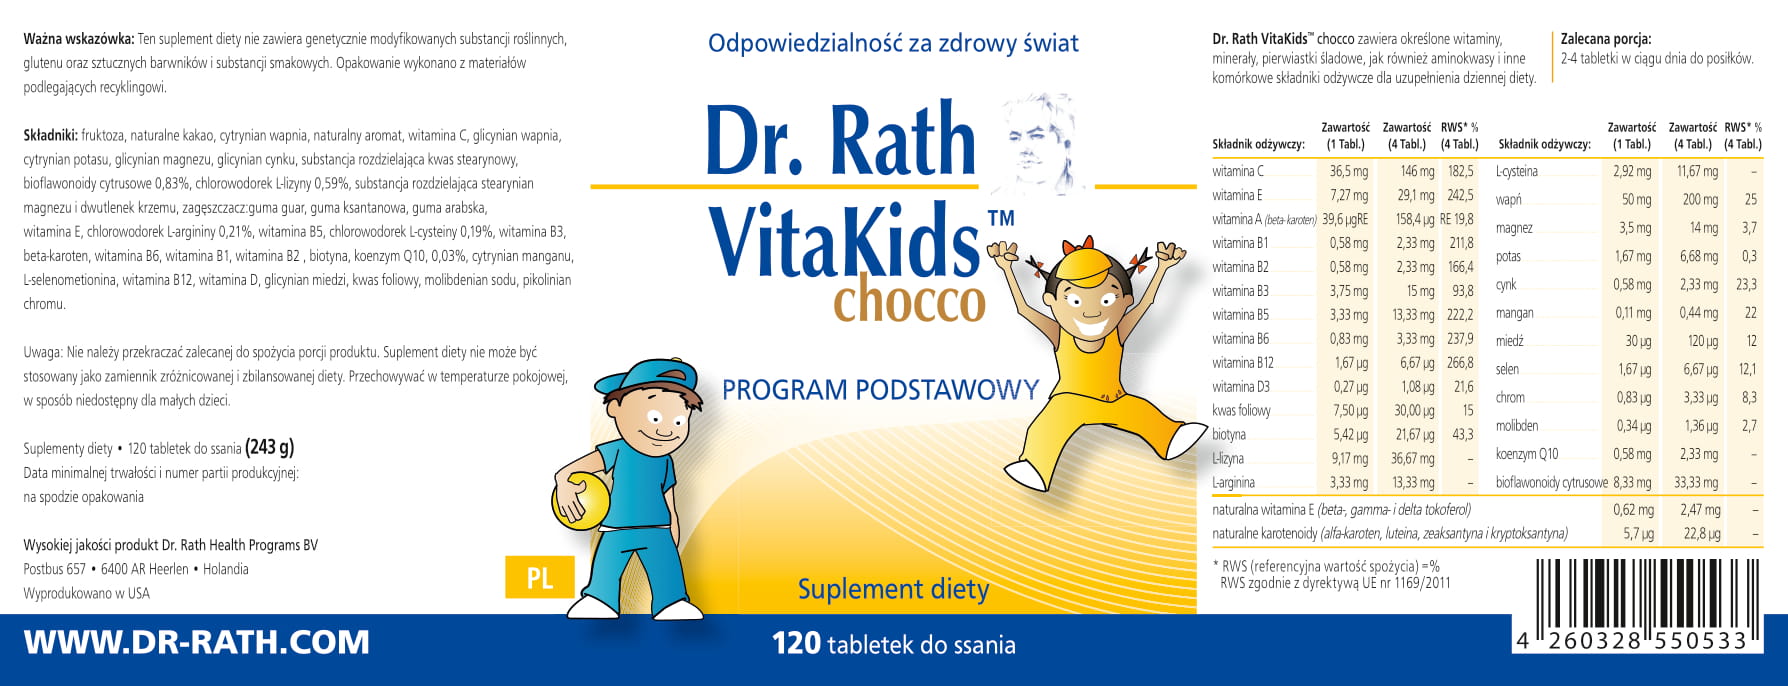 022_PL - Vitakids - Etykieta produktu-1.jpg